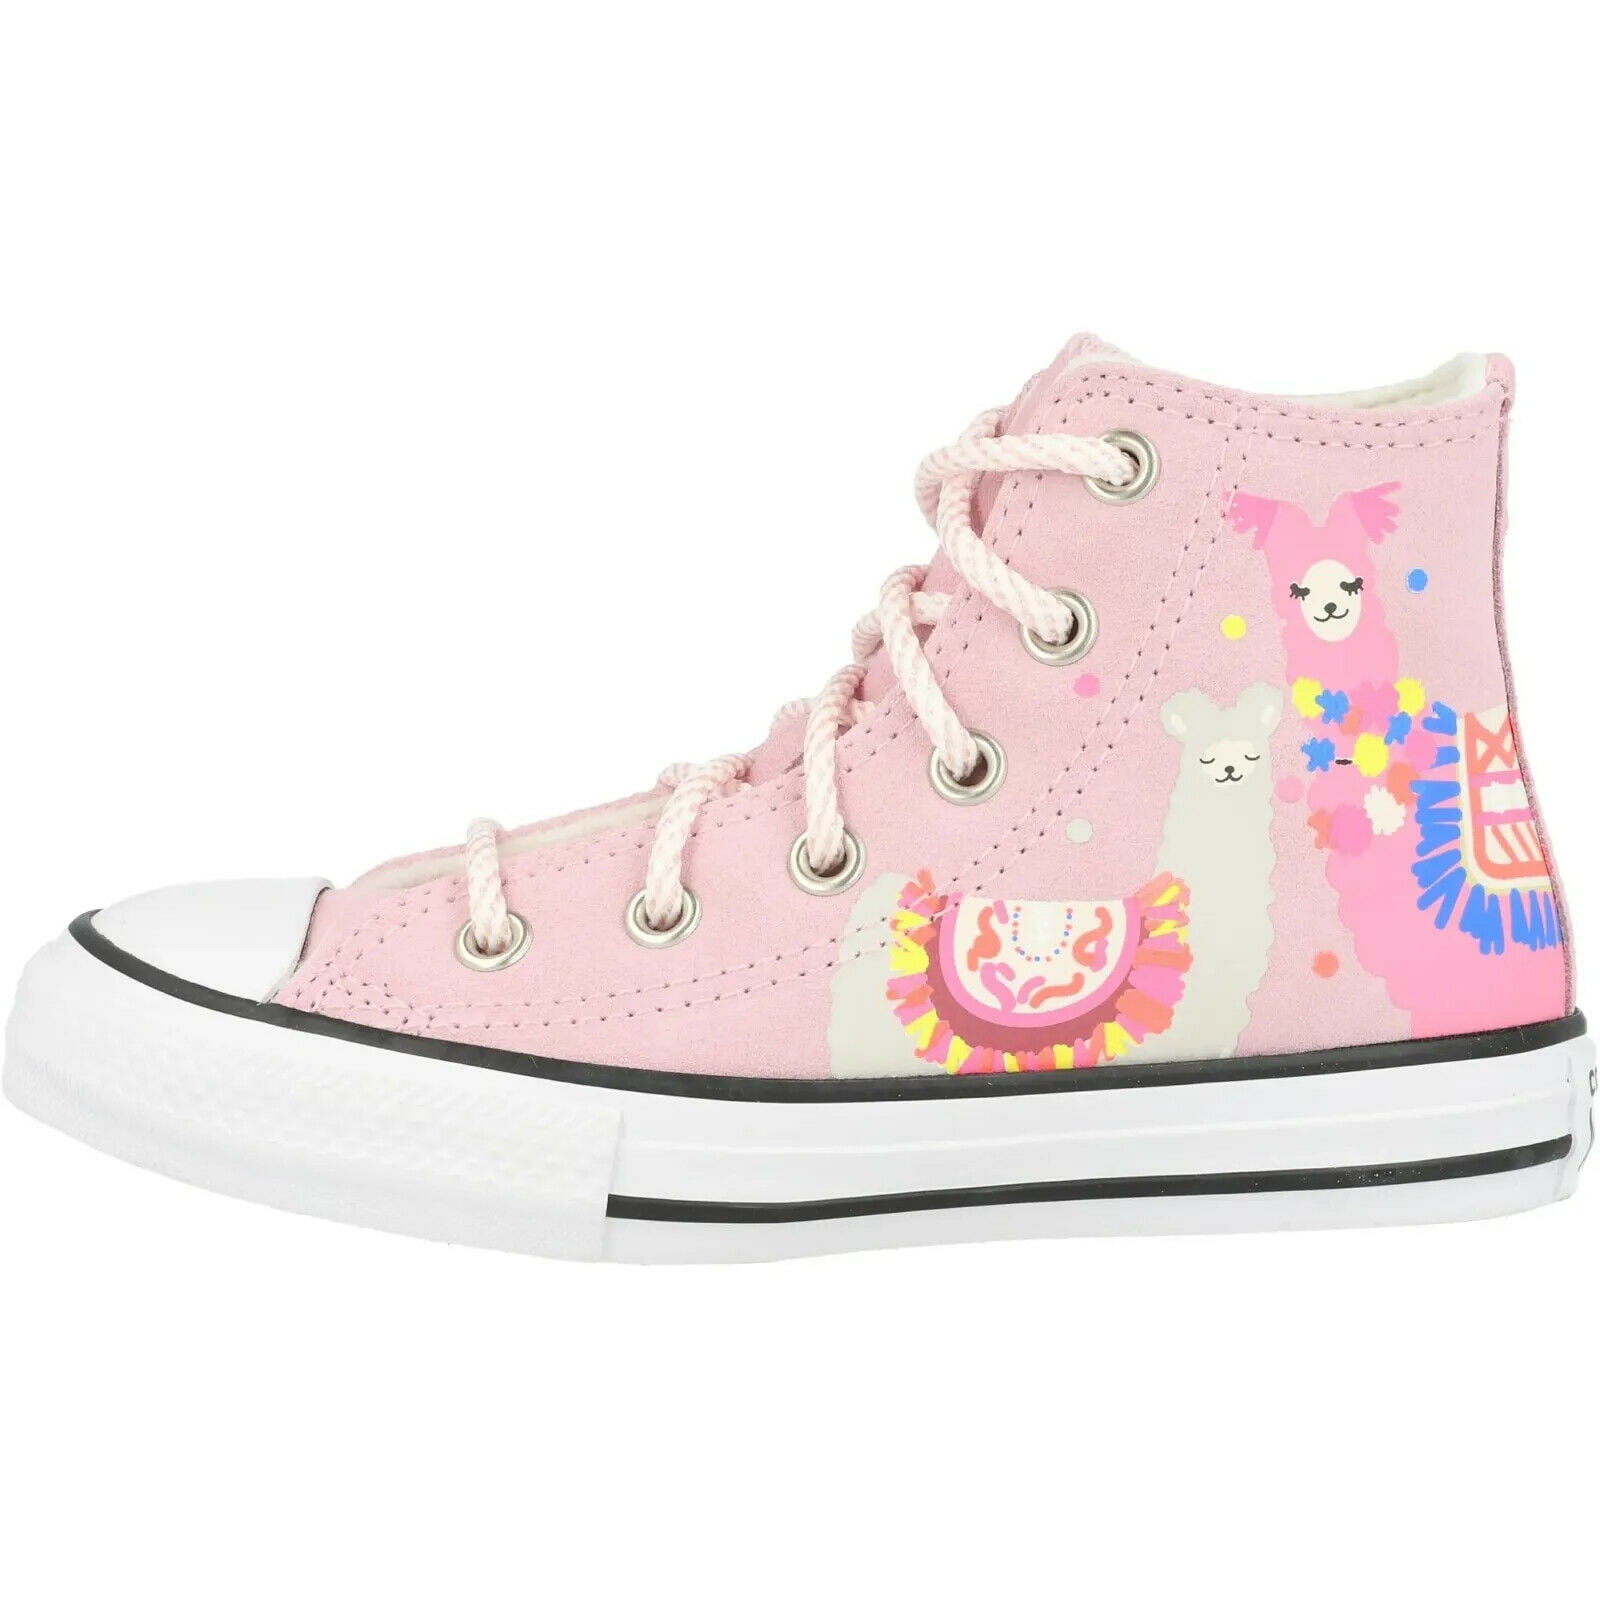 Converse Chuck Taylor Star Suede Shoe Girls Size 11M Pink Walmart.com